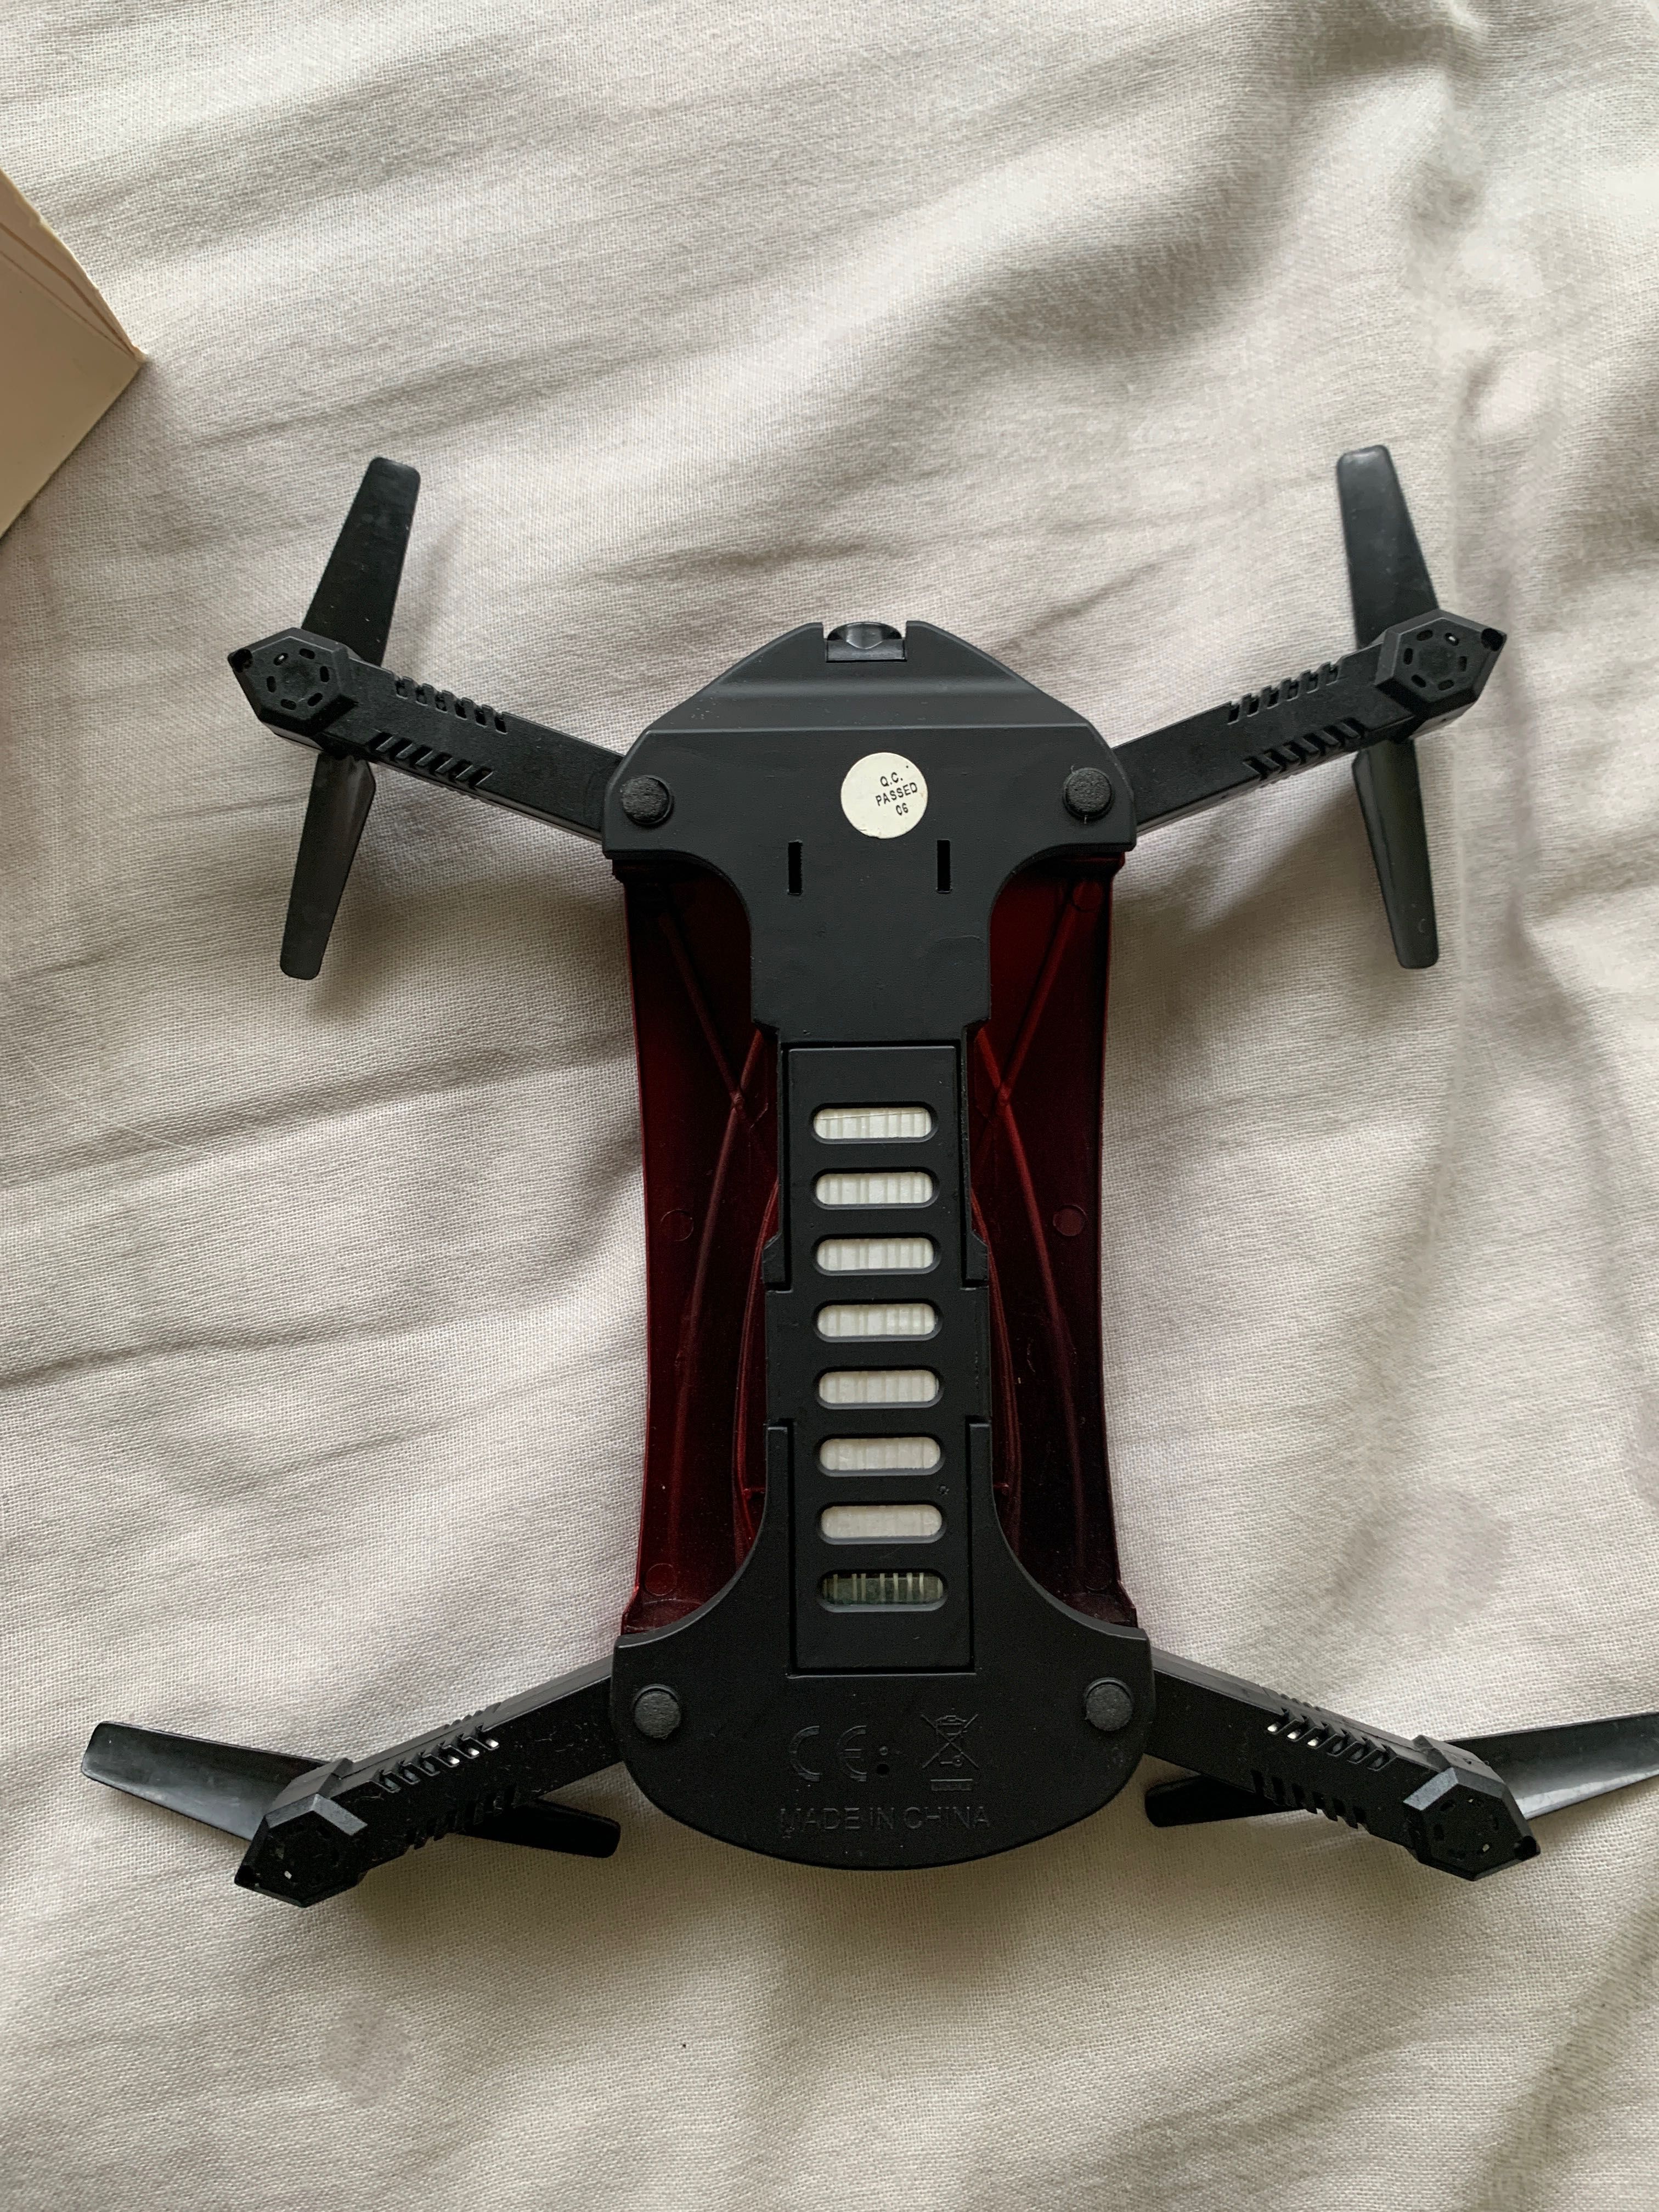 Drone JYO18 pocket drone